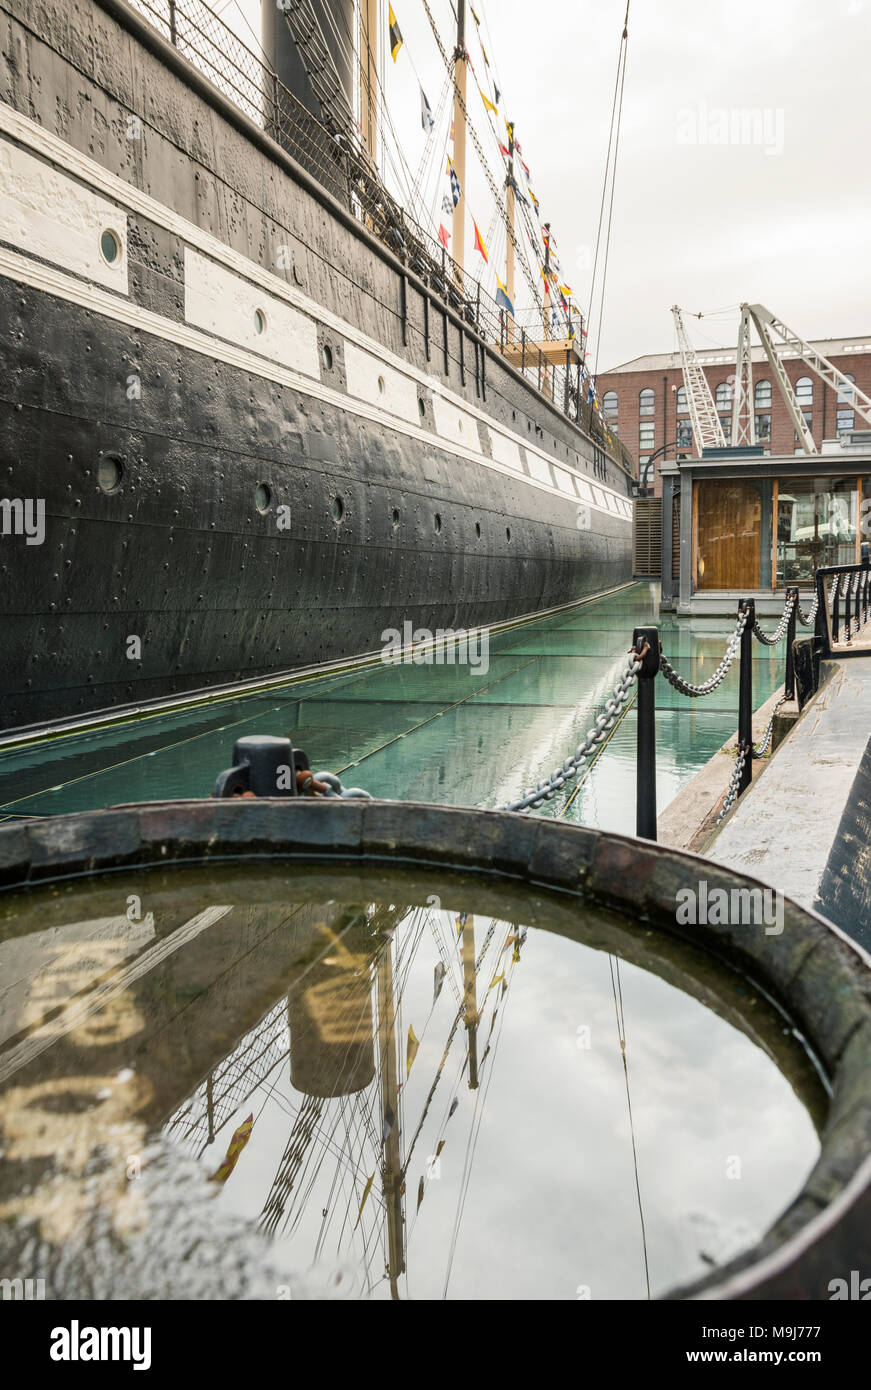 Brunel SS Gran Bretagna nella Great Western Dockyard, Bristol. Foto Stock